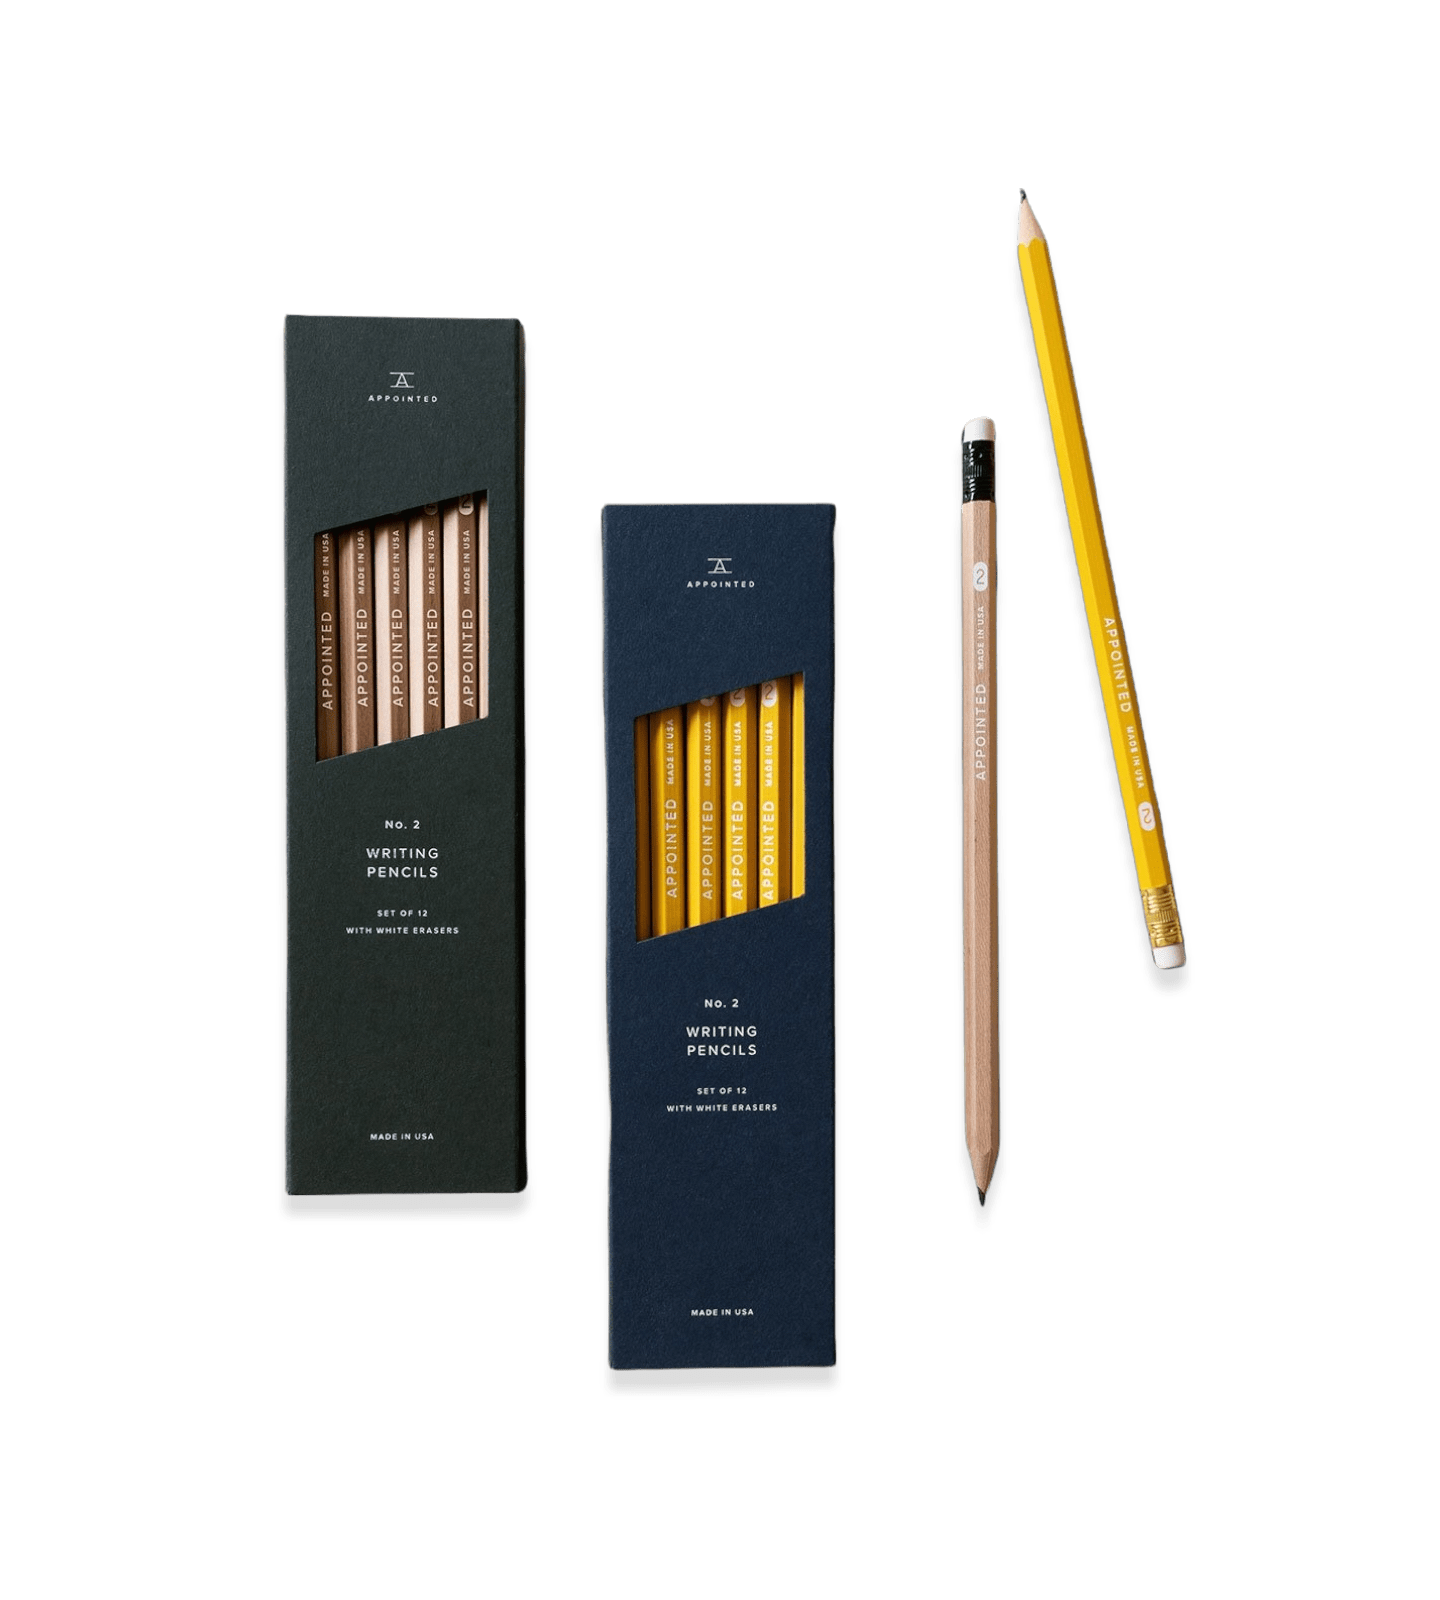 Set of 2 White Pencils